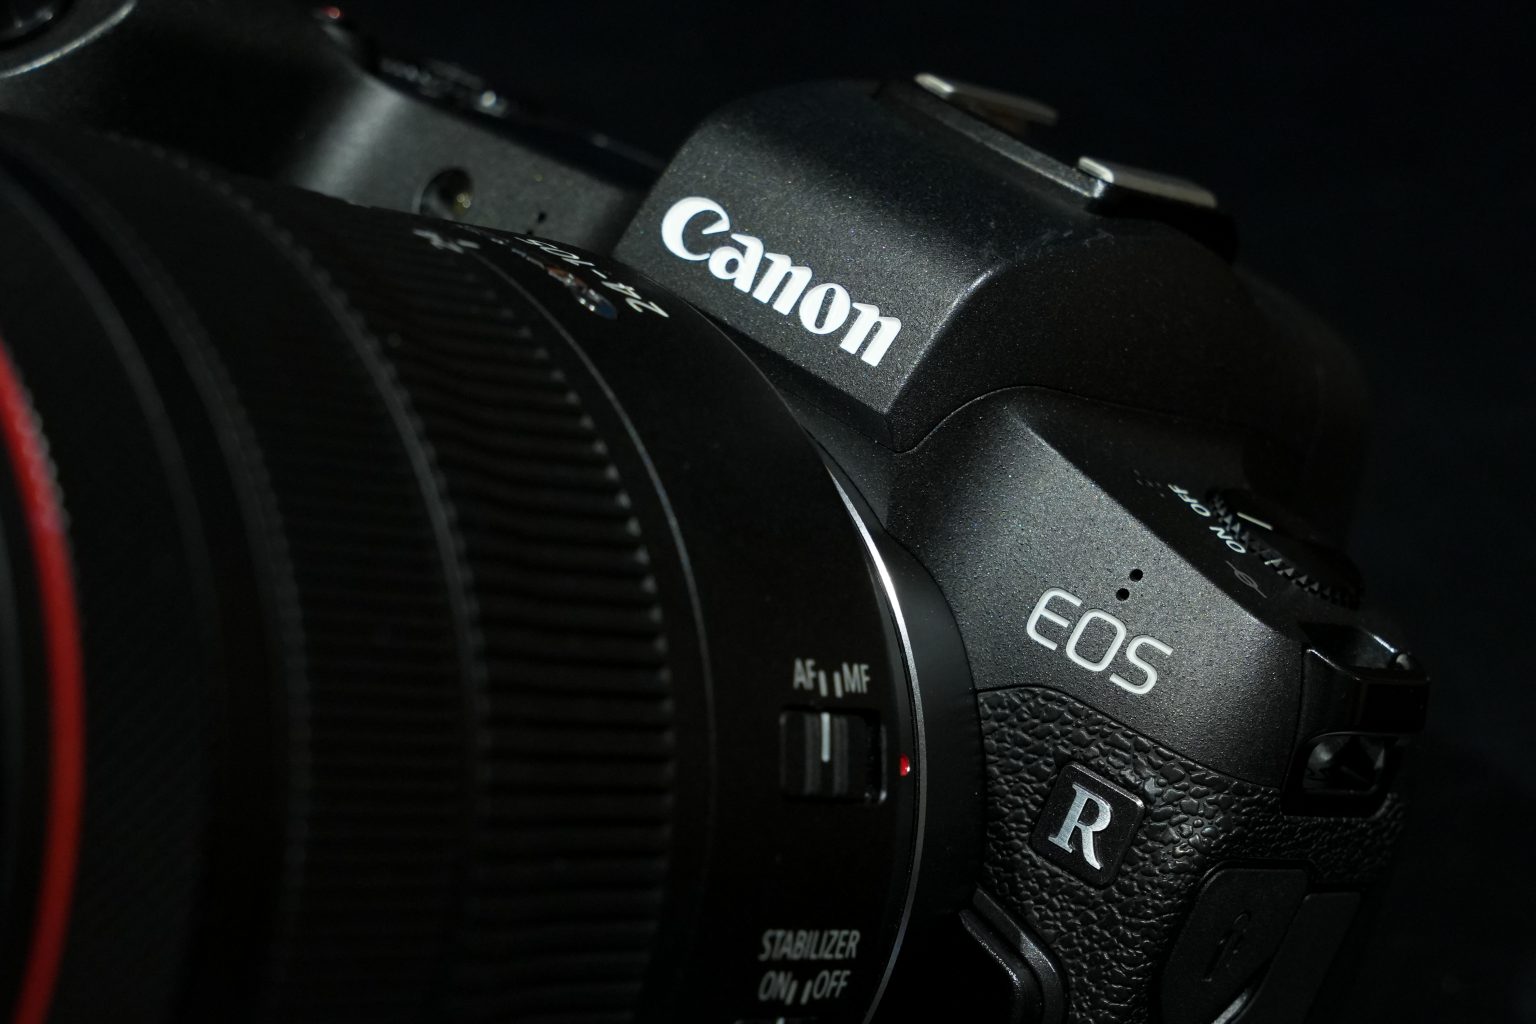 【Canon】改めて今、Canon EOS Rの魅力に再注目